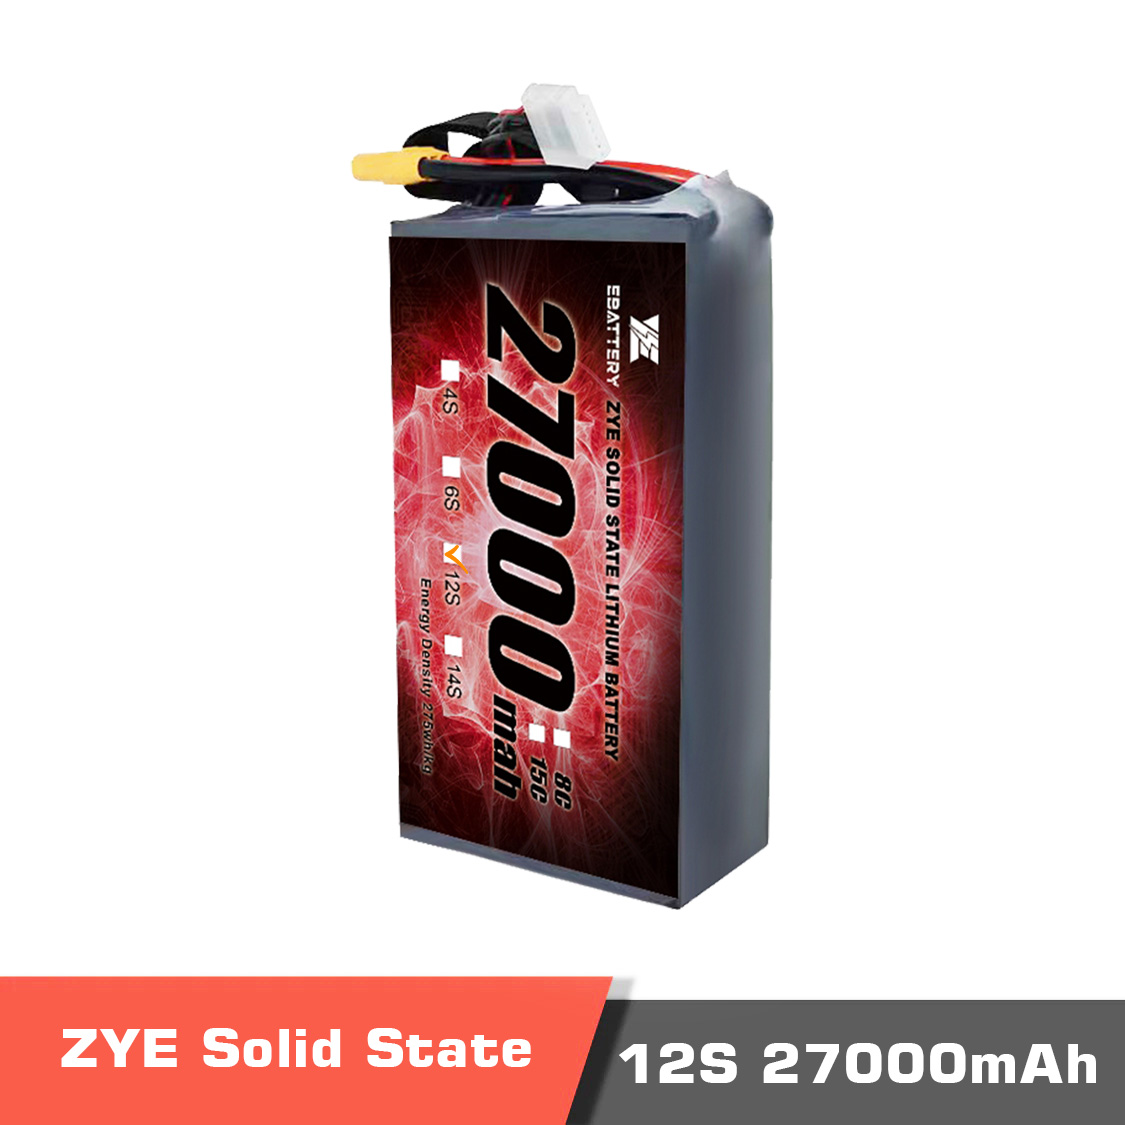 ZYE 27000 12s temp.1 - ZYE Power Ultra HV Semi Solid-State Battery, Ultra HV Semi Solid-State Battery, 14S 27000mAh high voltage LiPo Battery, 14S 27000mAh HV LiPo Battery, Solid-state LiPo battery, lipo battery, drone battery, 14s battery, high energy density battery, UAV, drone, vtol, ZYE Power, ZYE power Battery - MotioNew - 1